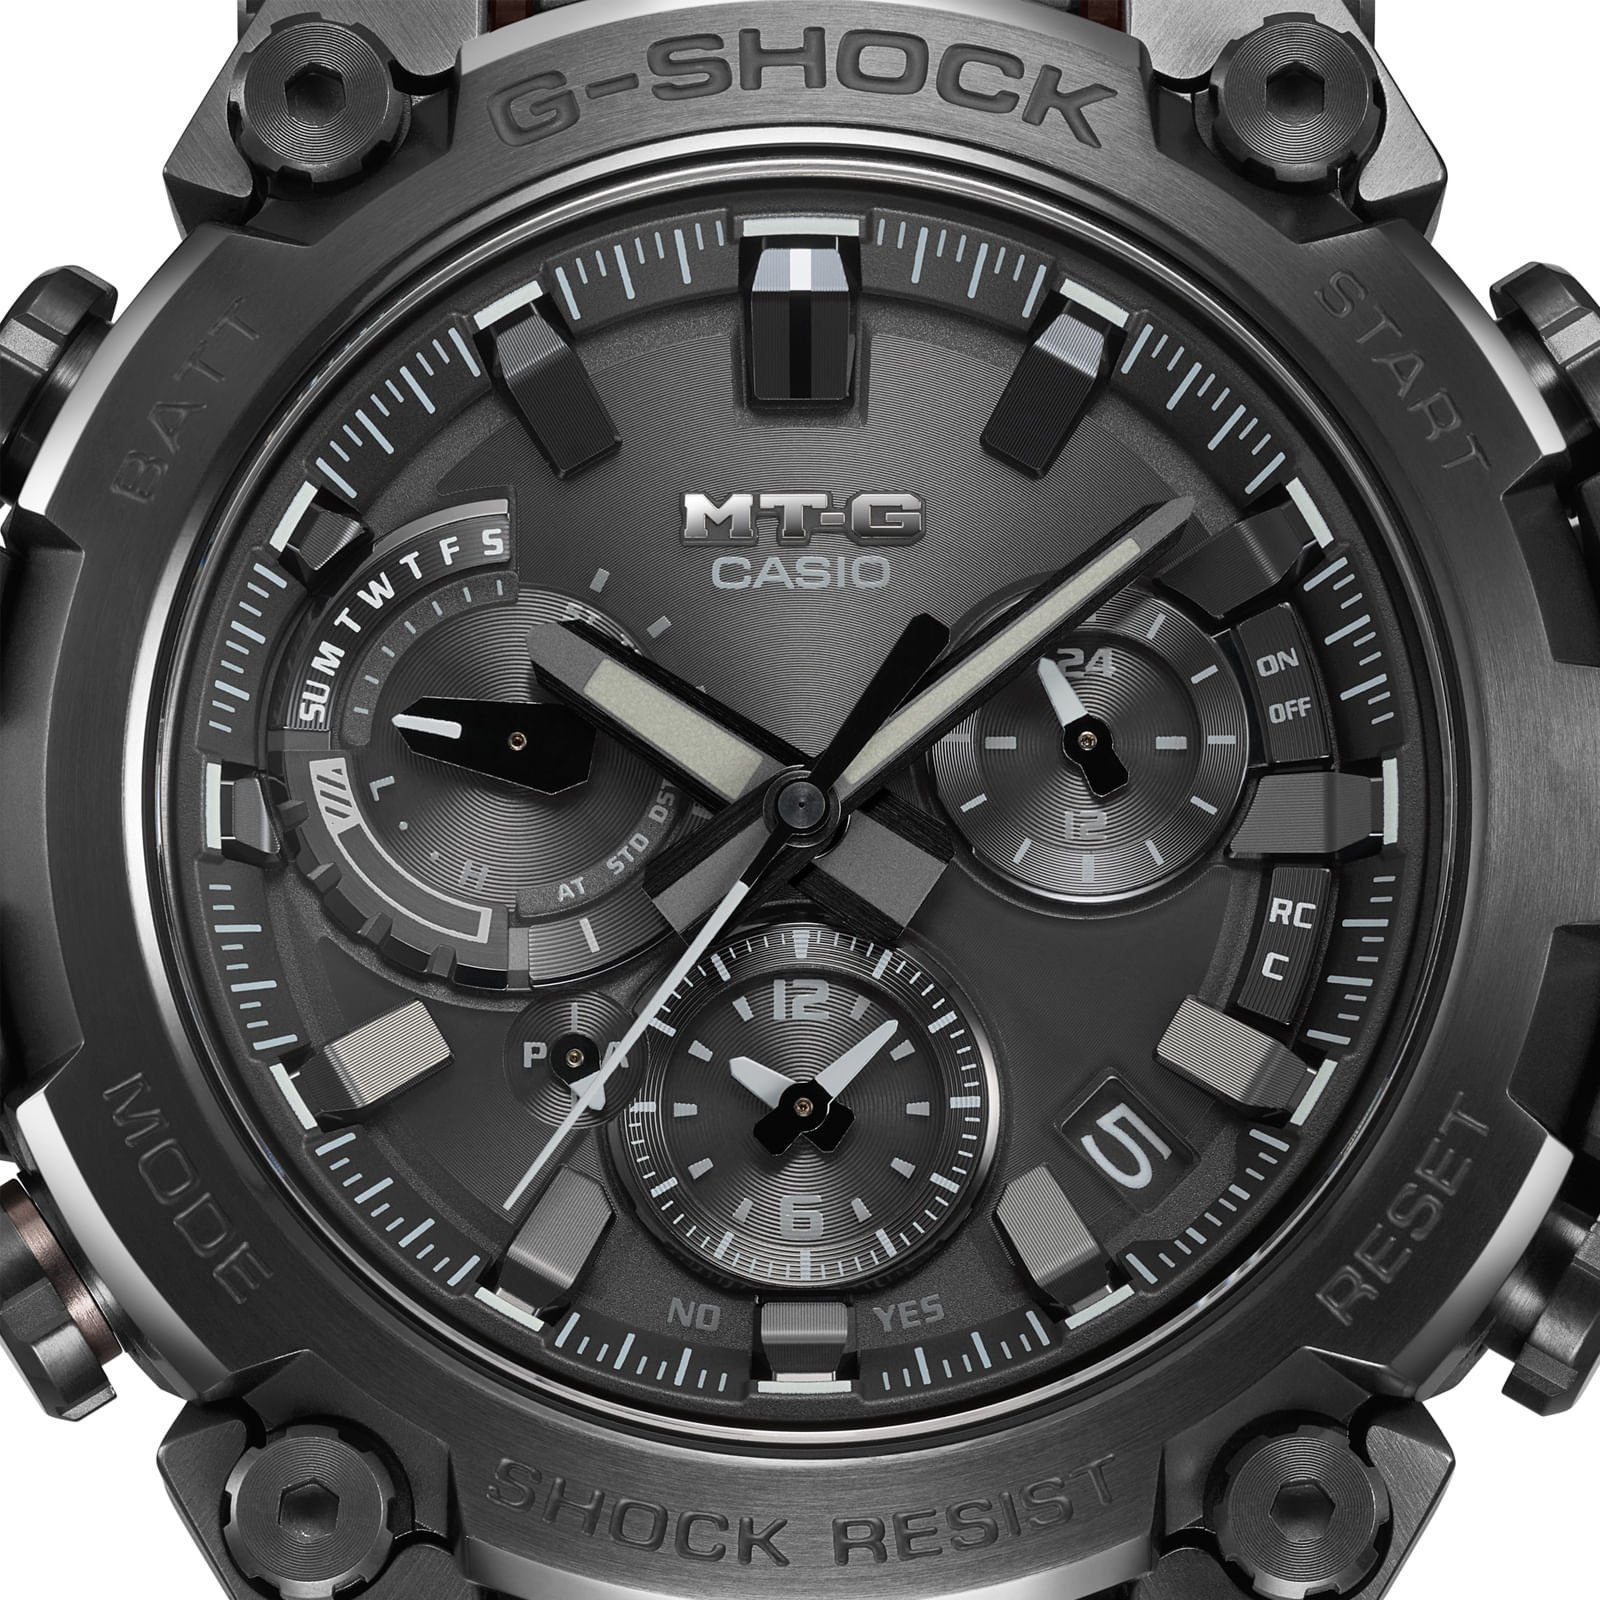 Reloj G-SHOCK MTG-B3000B-1A Resina/Acero Hombre Negro